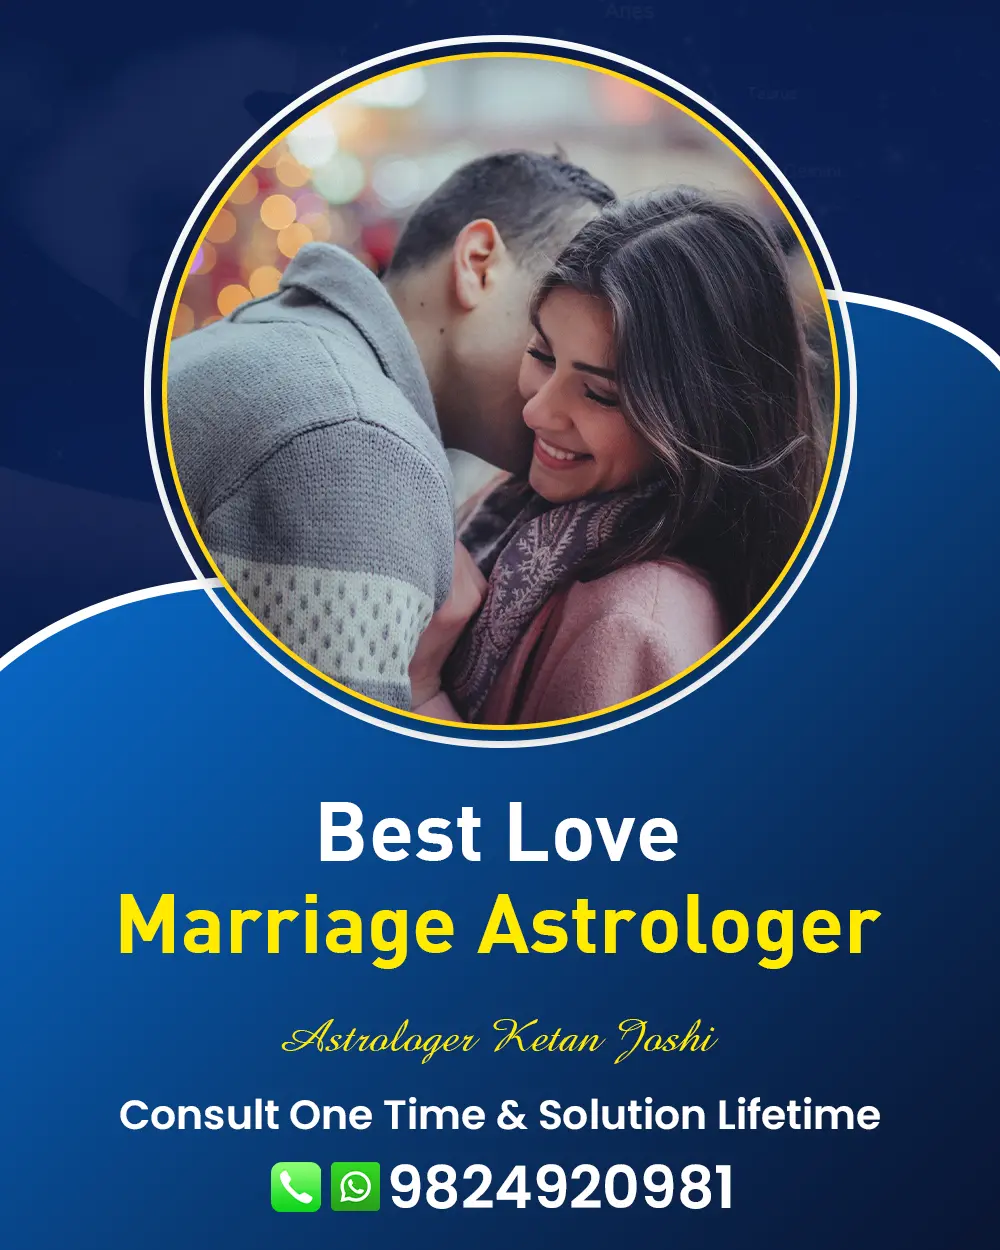 Love Marriage Astrologer In Porbandar